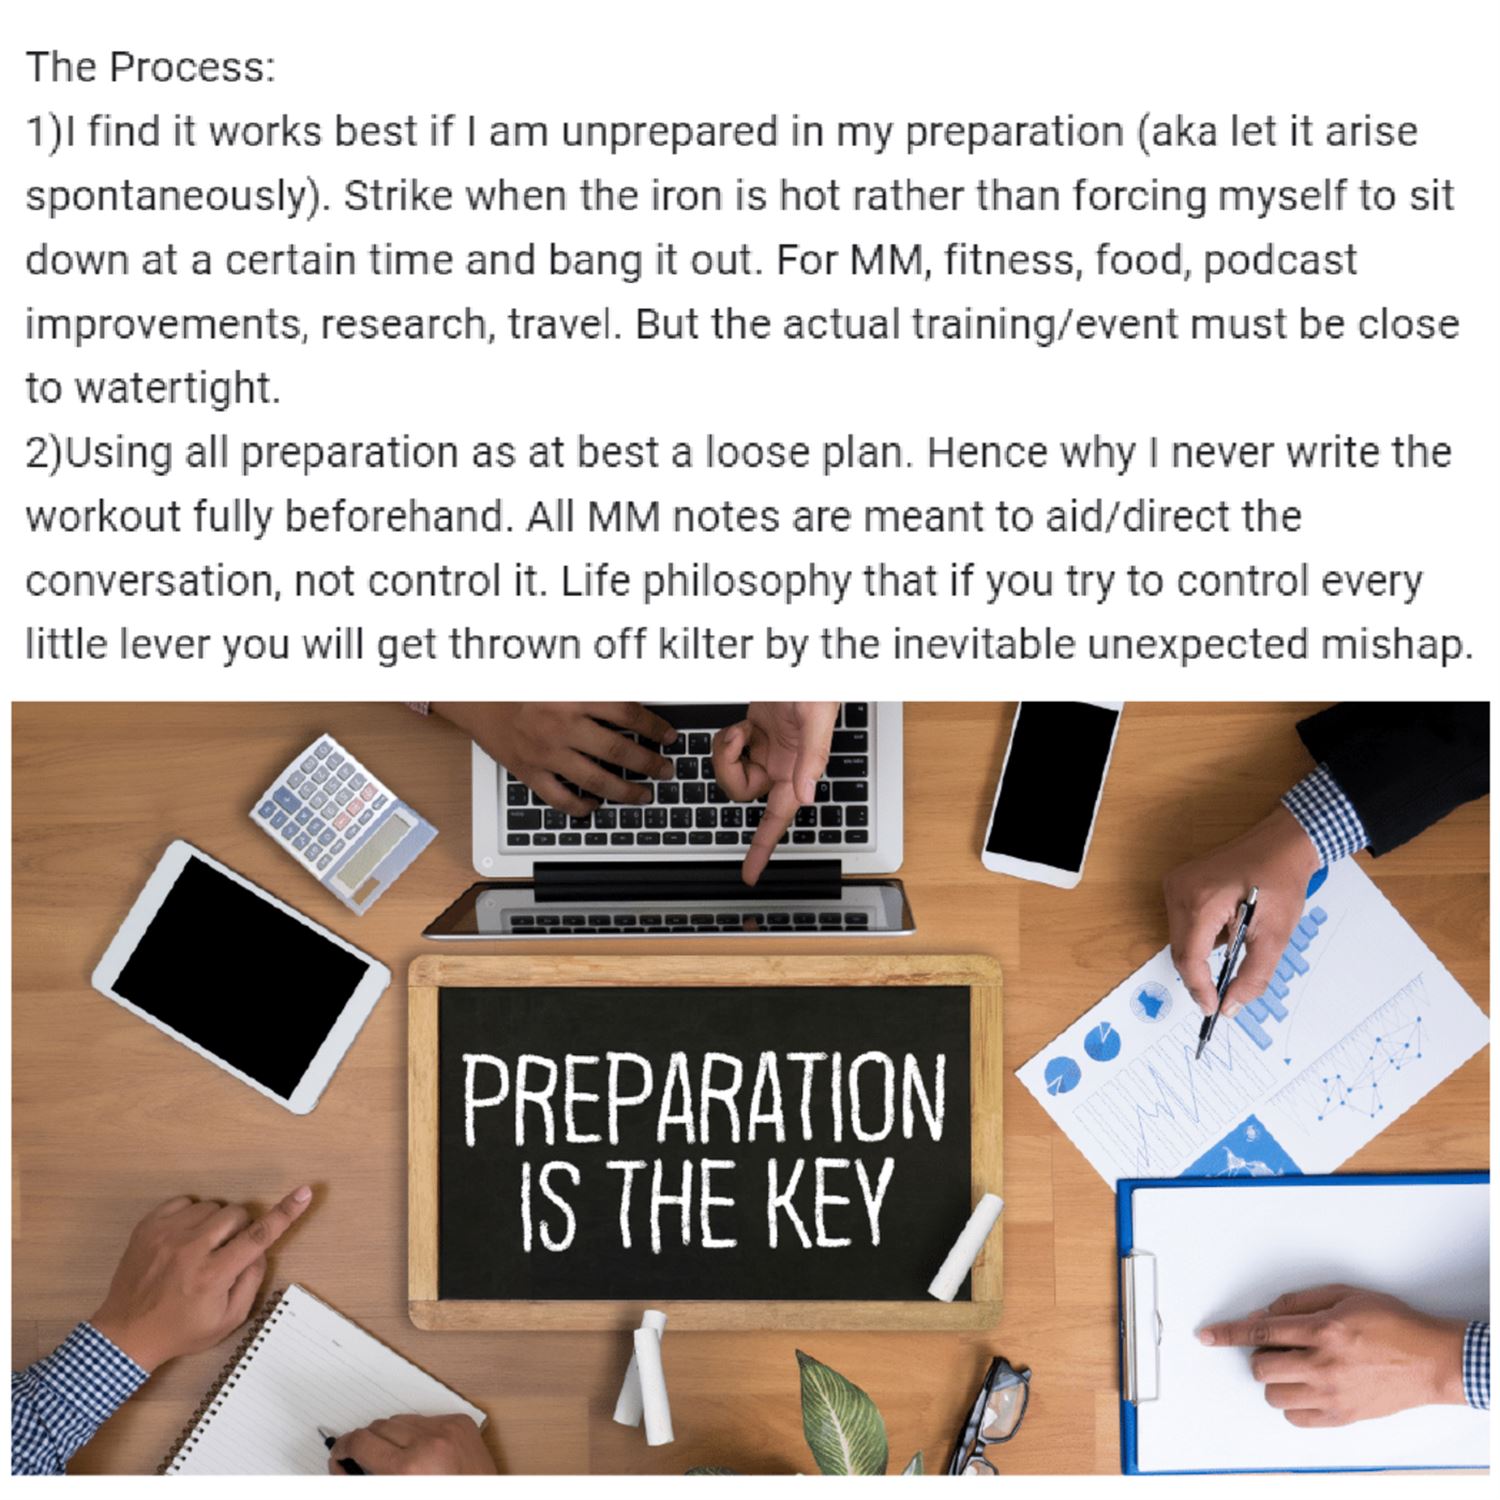 The process of preparing